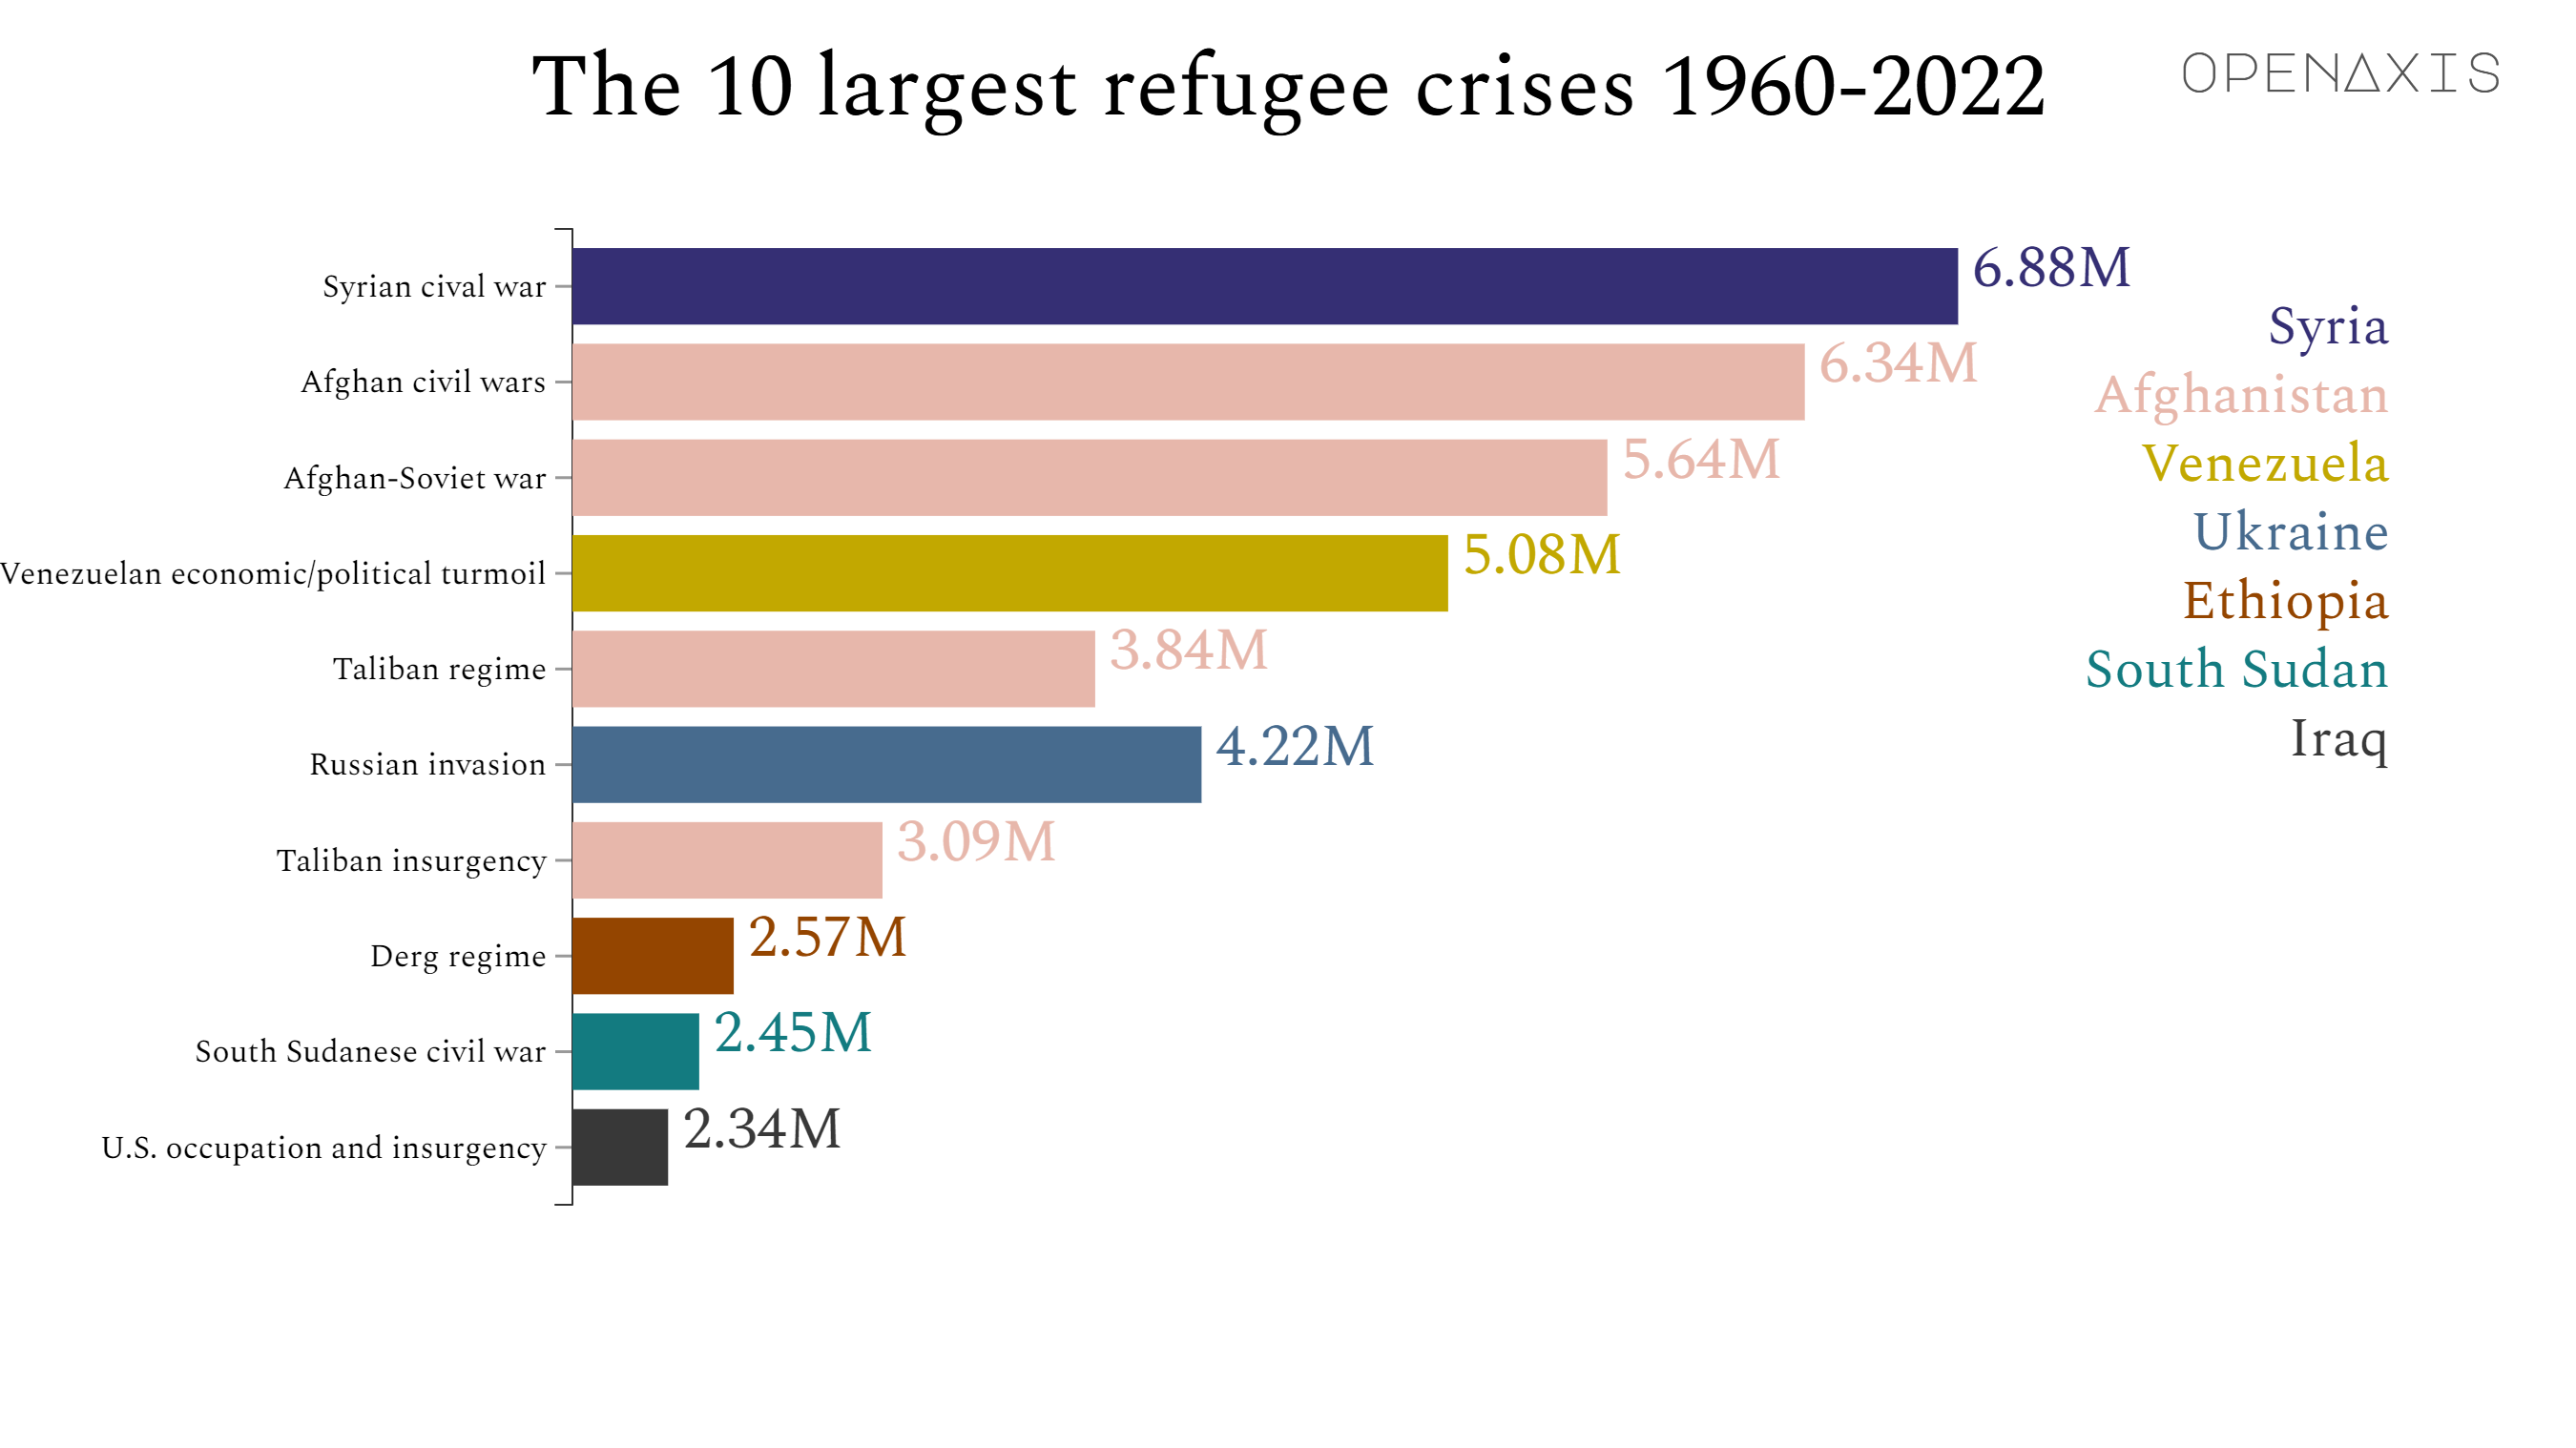 "The 10 largest refugee crises 1960-2022"